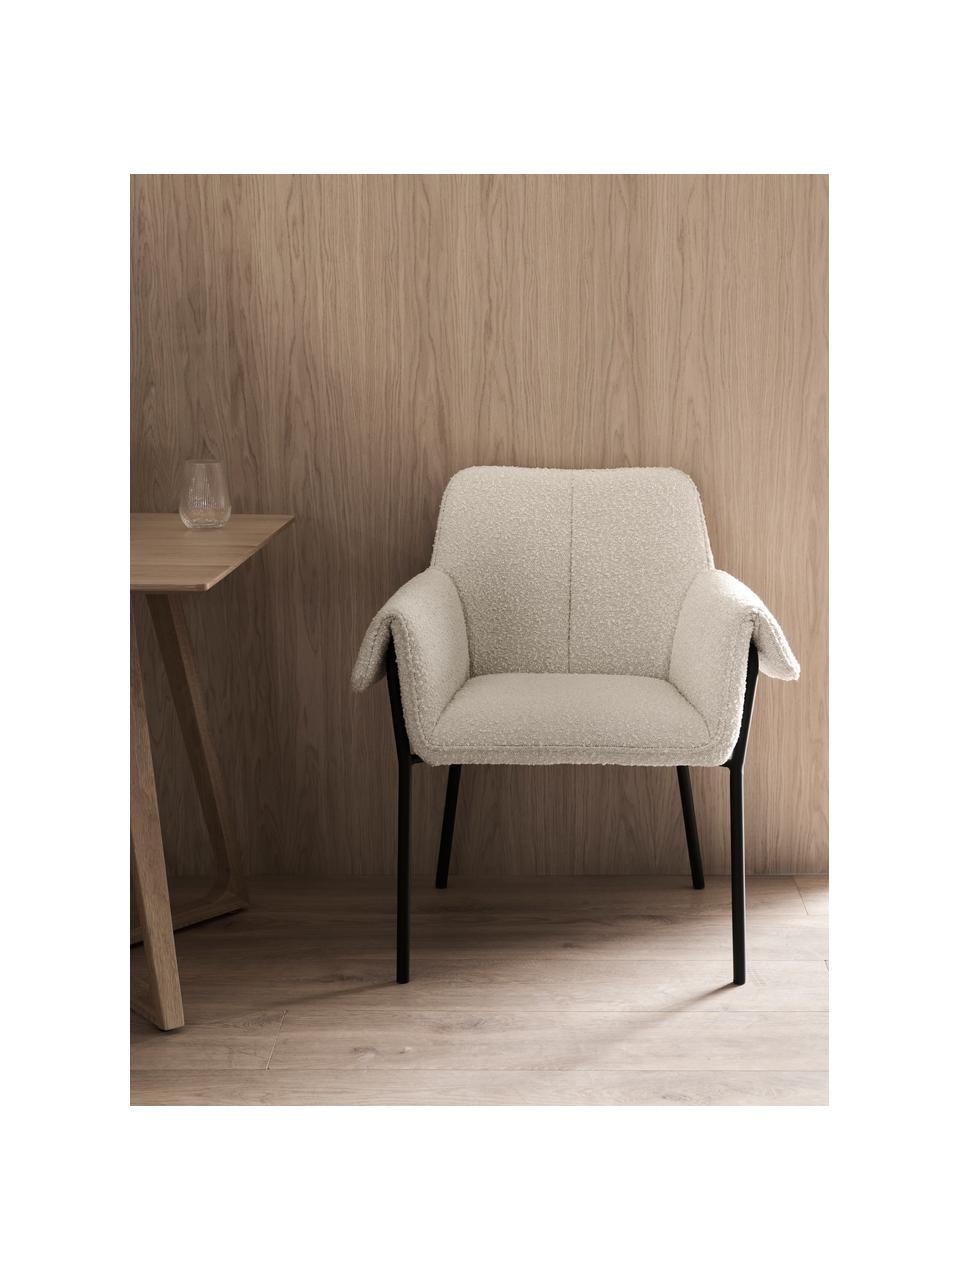 Chaise à accoudoirs tissu bouclé blanc Effekt, 2 pièces, Tissu bouclé blanc, larg. 73 x prof. 54 cm